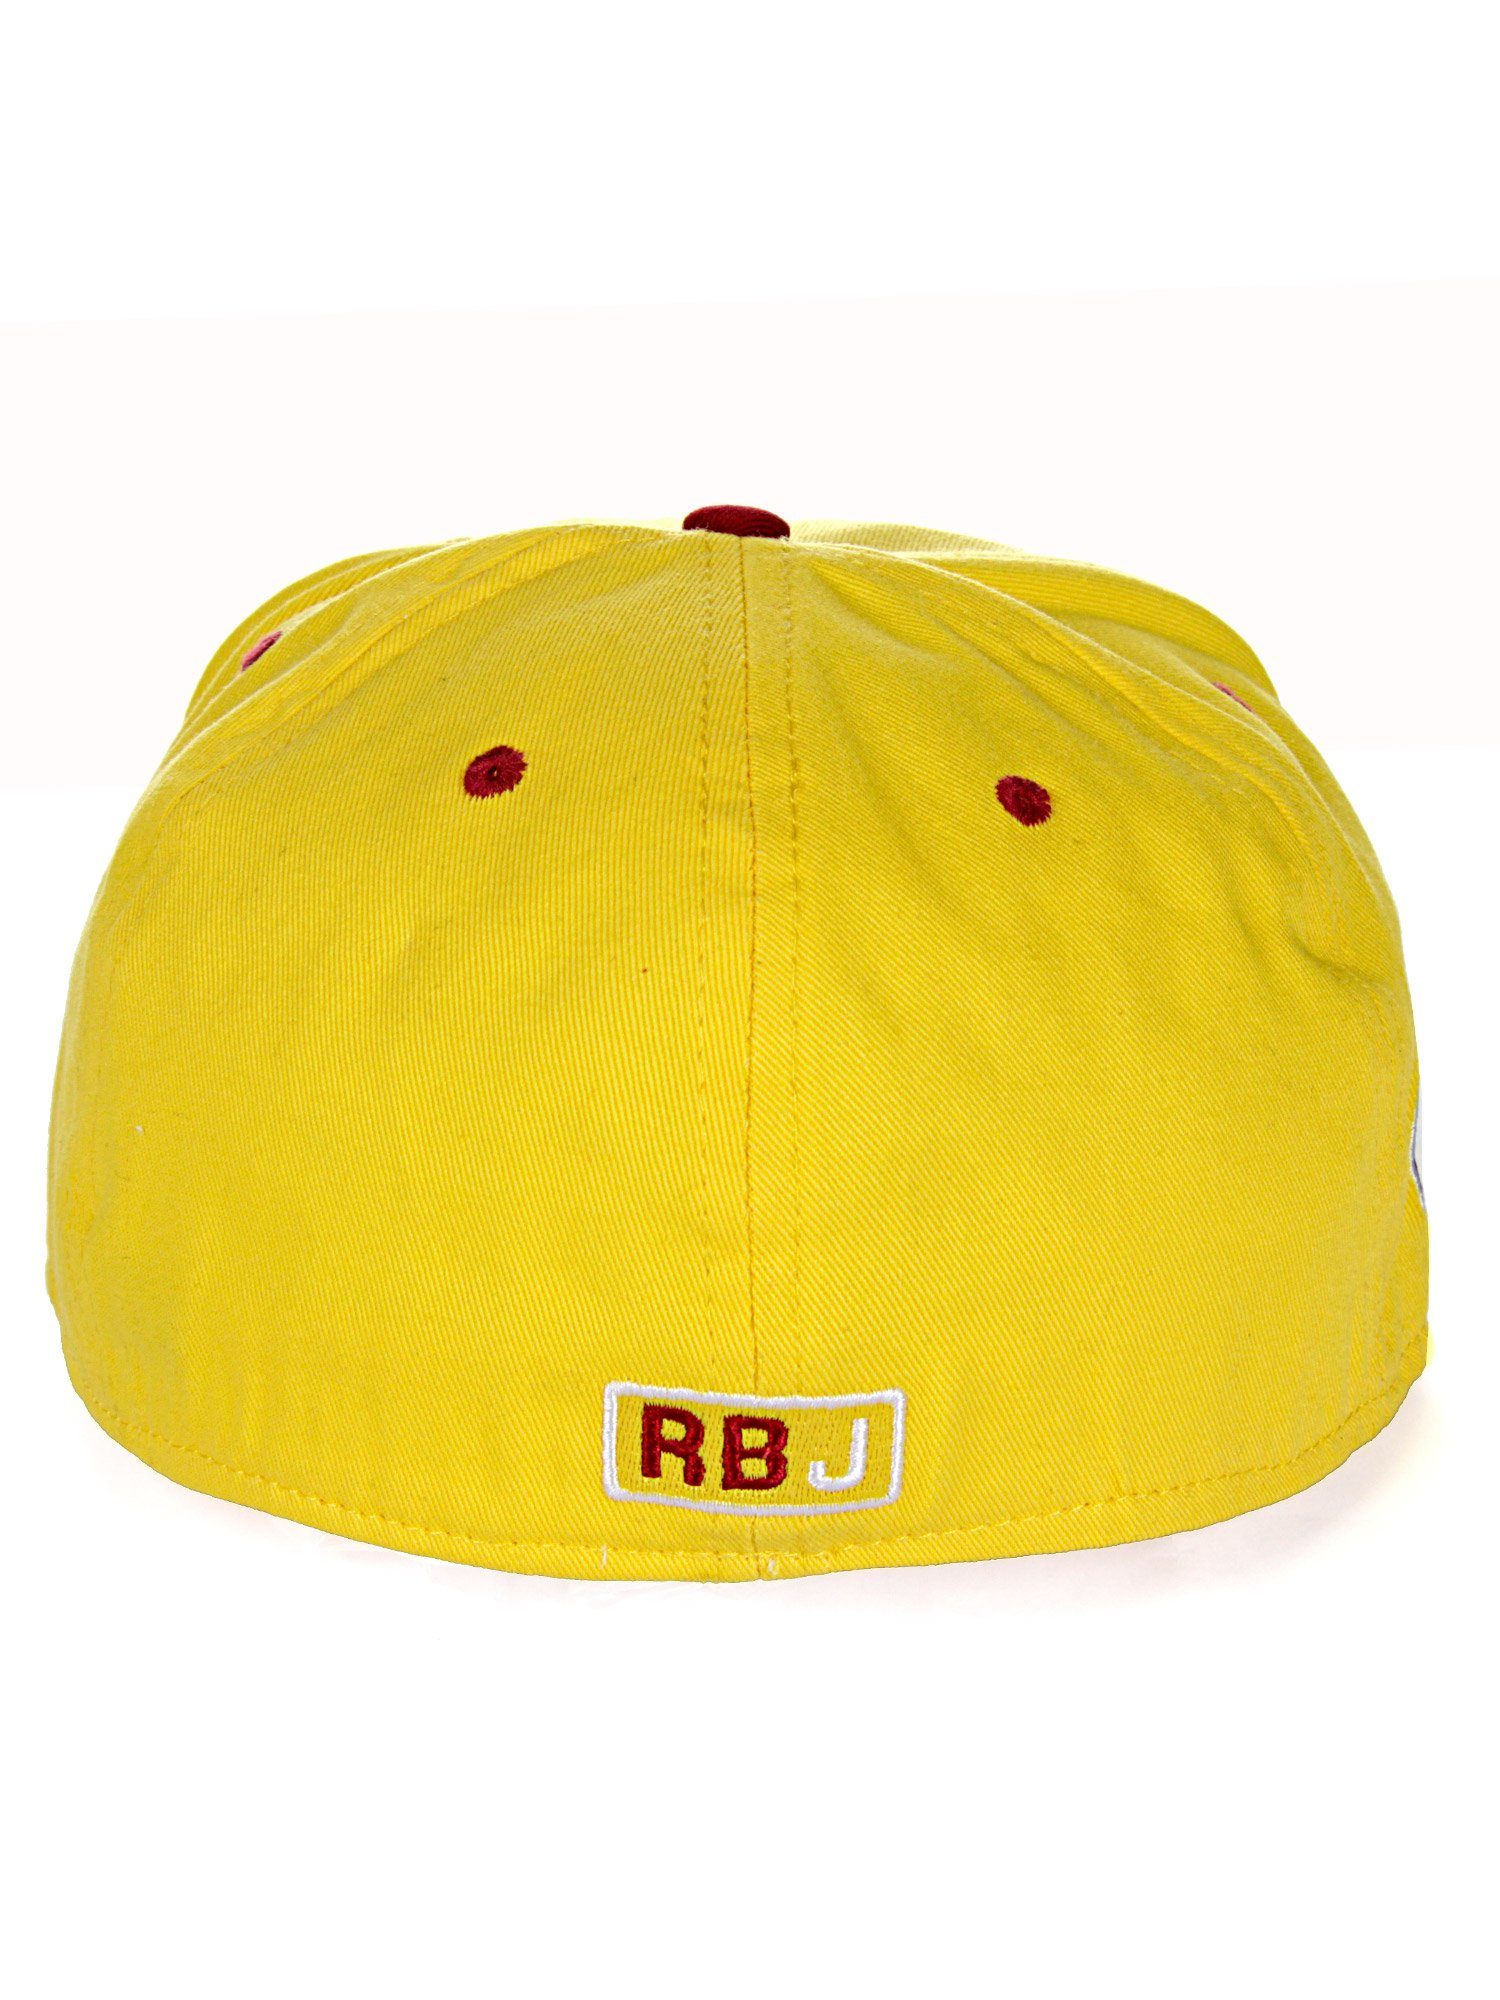 Durham gelb-rot Baseball RedBridge mit kontrastfarbigem Cap Schirm